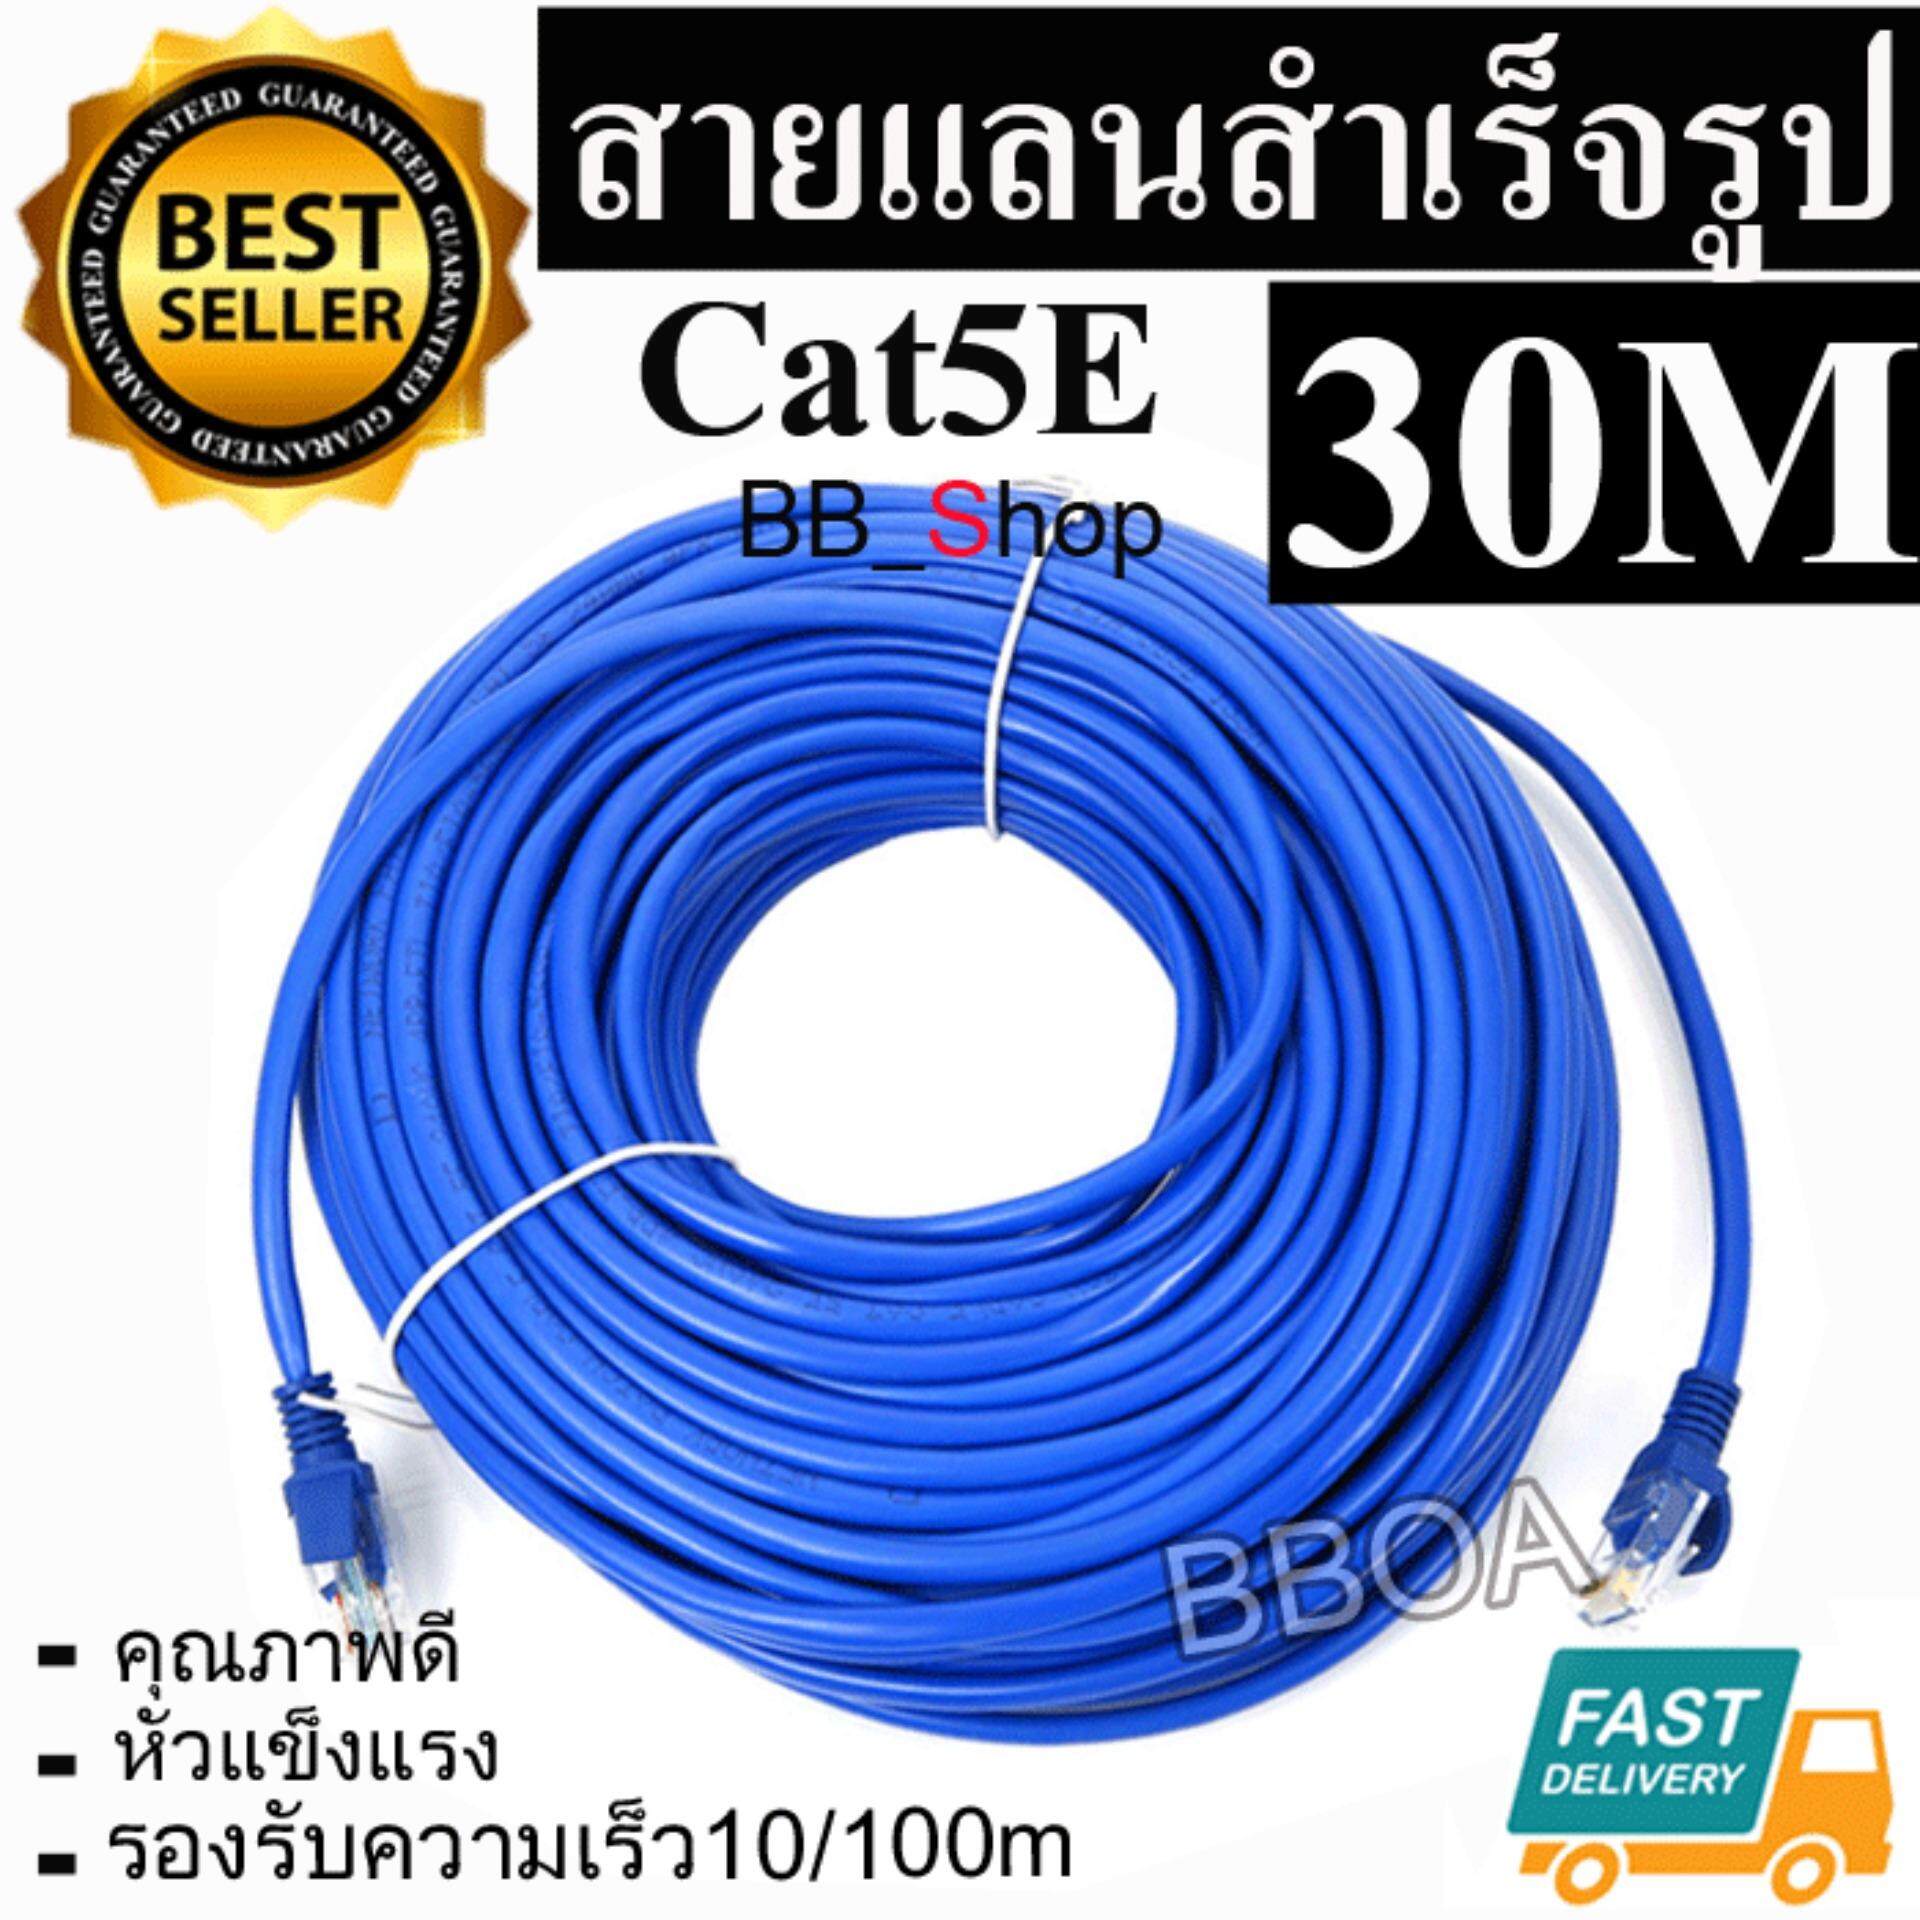 BB Link Cable Lan CAT5E 30m สายแลน เข้าหัวสำเร็จรูป 30เมตร (สีน้ำเงิน)